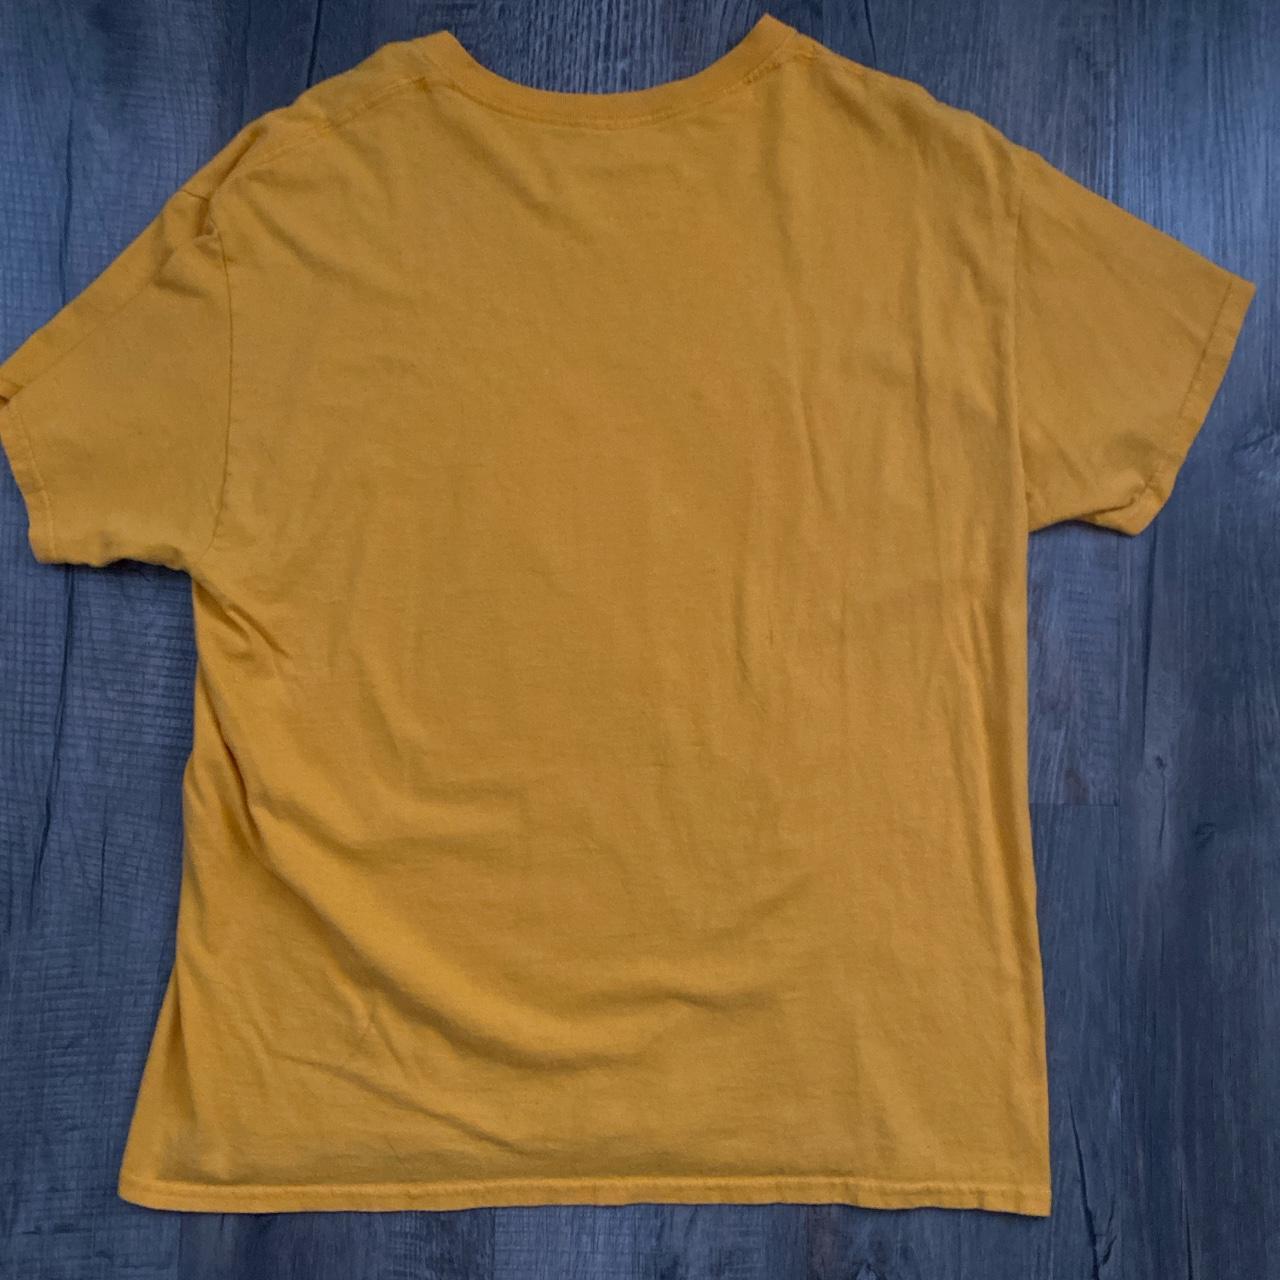 Brockhampton Men's Yellow and Red T-shirt (3)